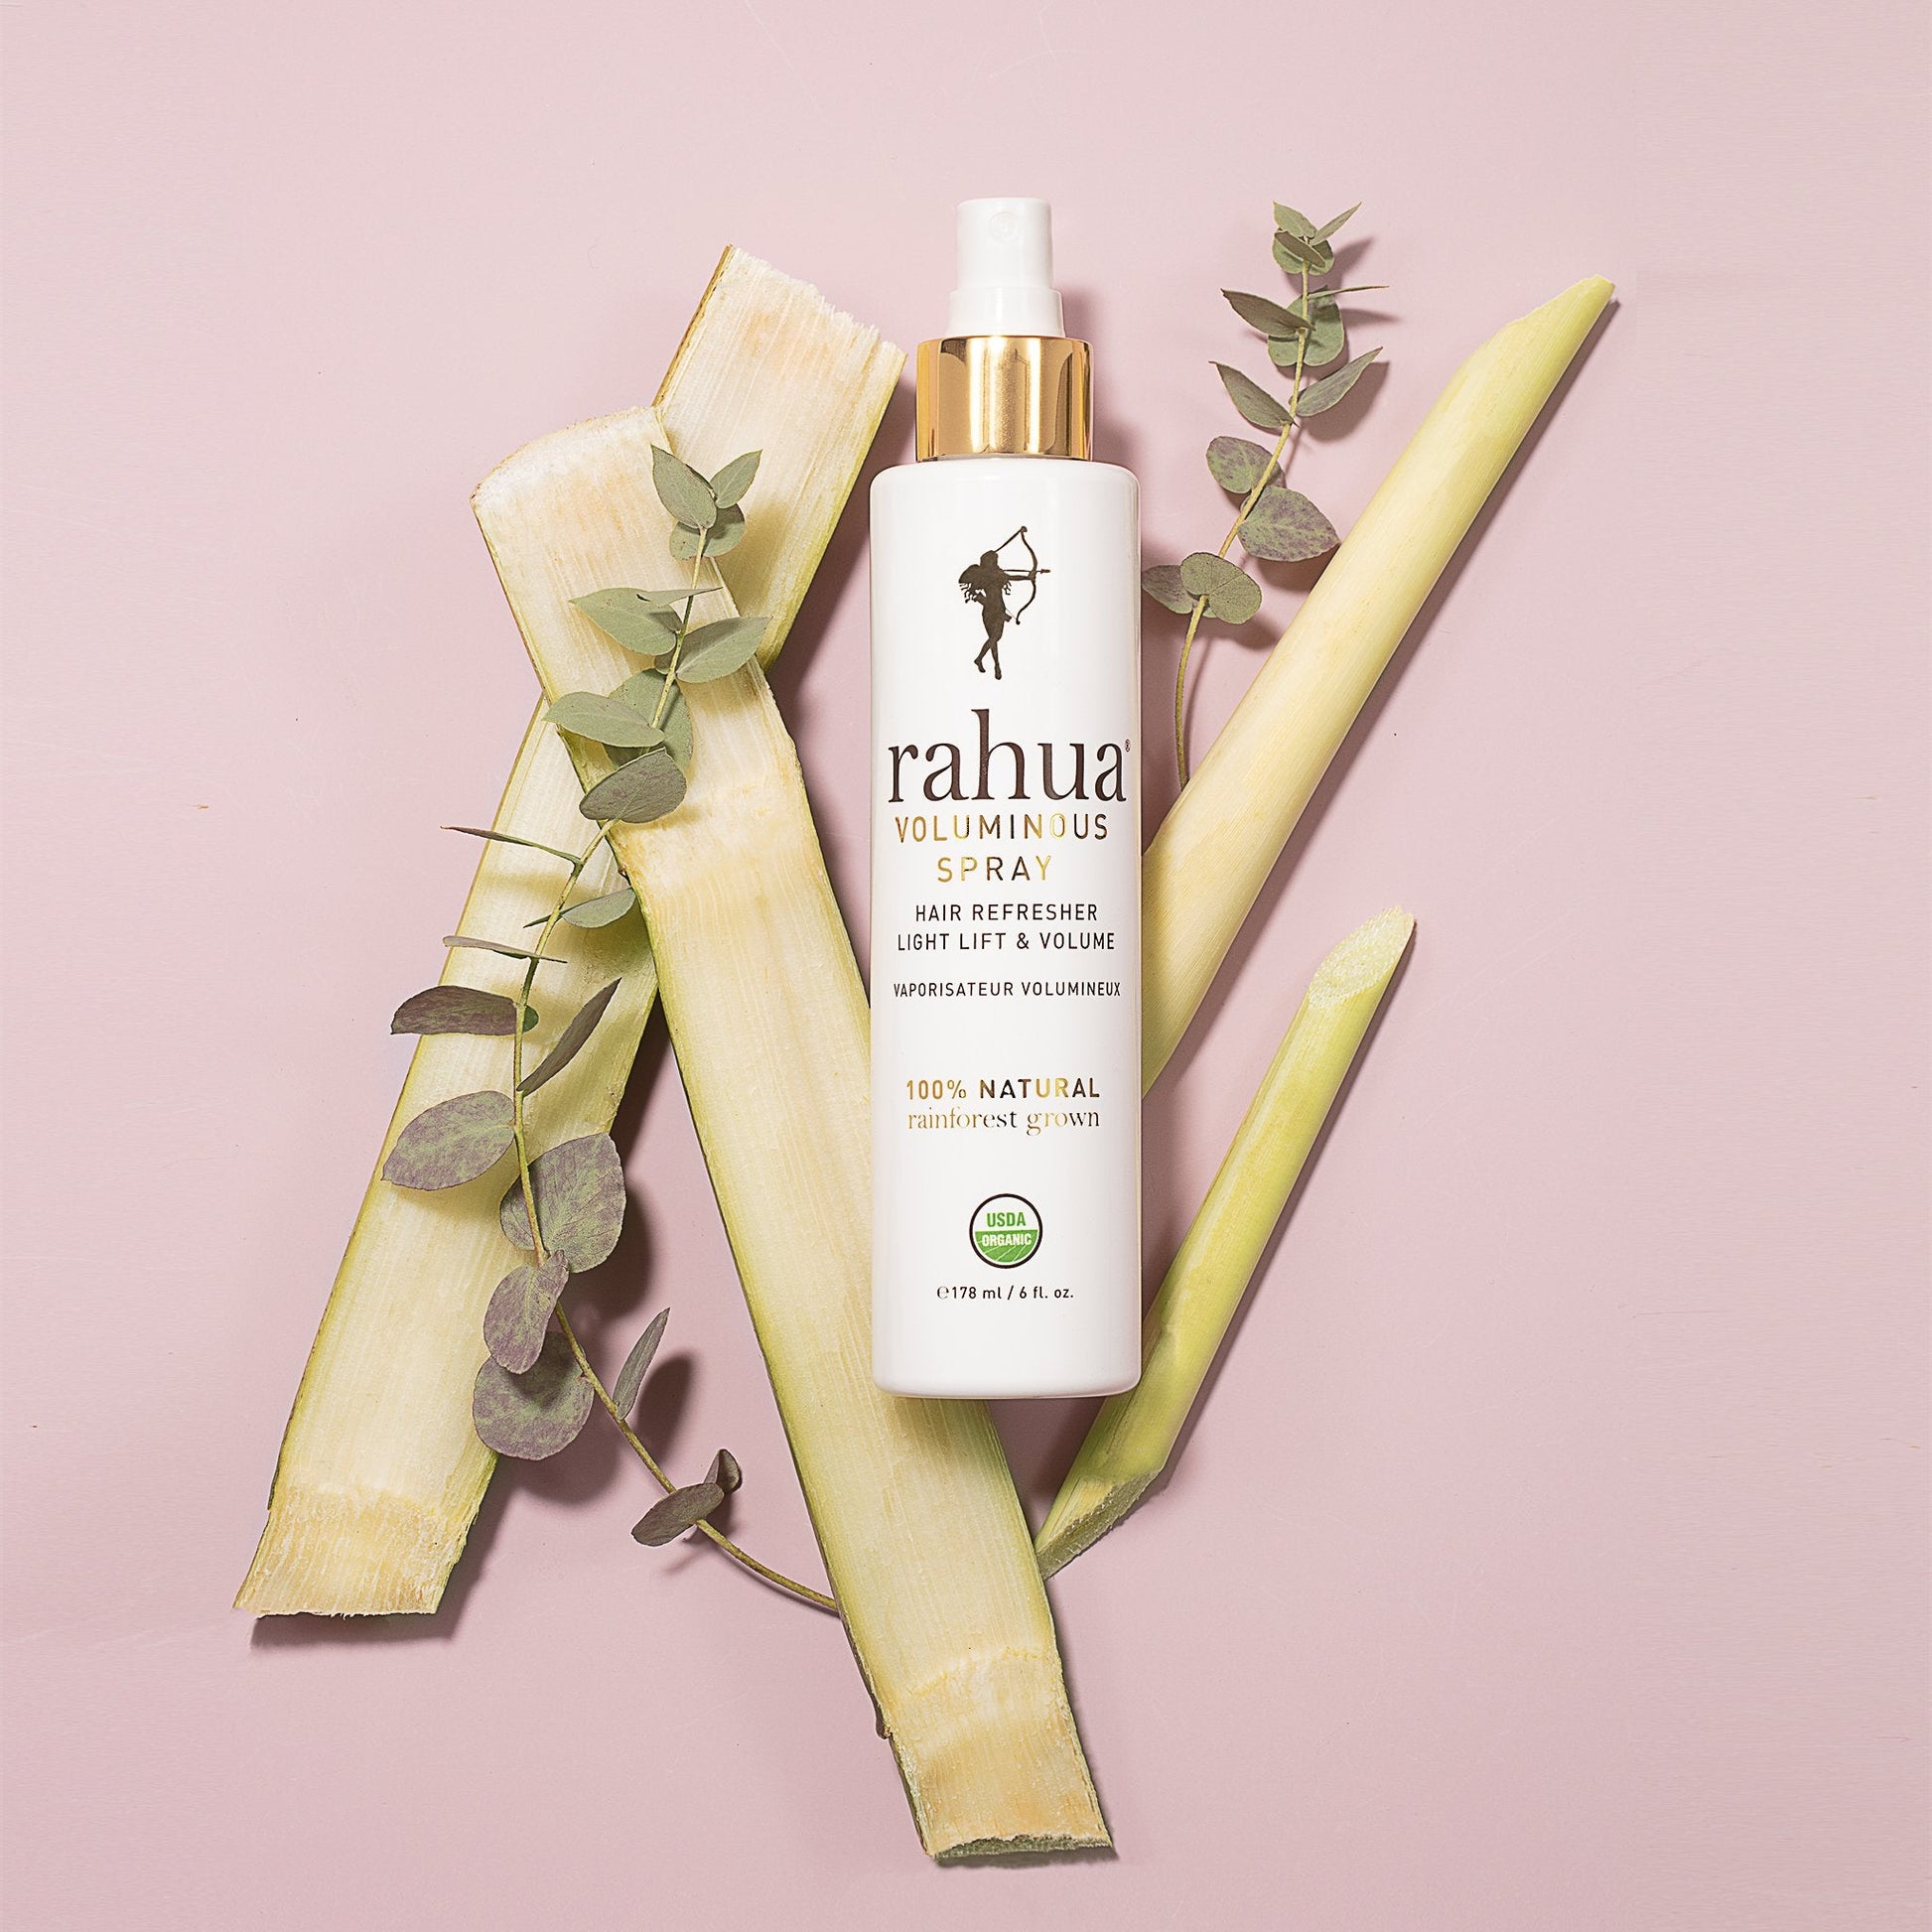 Rahua Voluminous Spray bottle with Lemongrass, Sugercane, and Eucalyptus